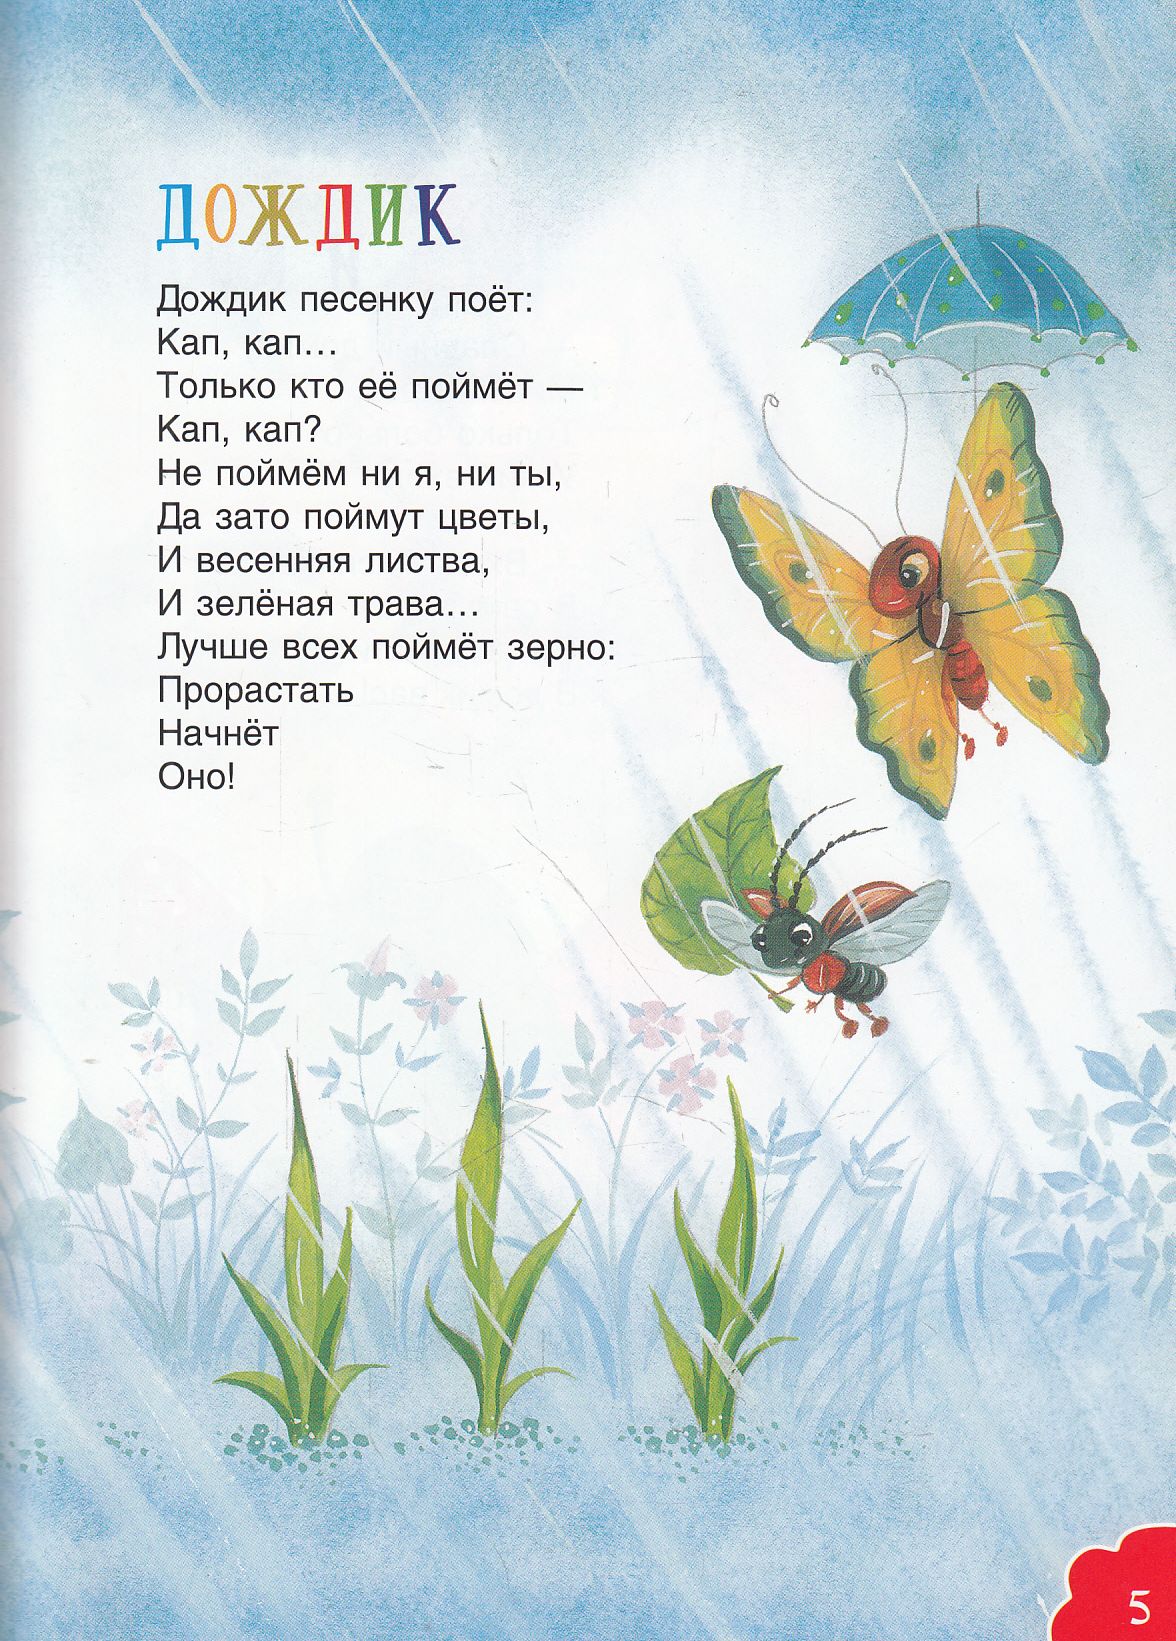 Стихотворение про простейших. Простые стихи. Простые стихи для заучивания. Стихотворение для детей. Детские стихи про дождик.